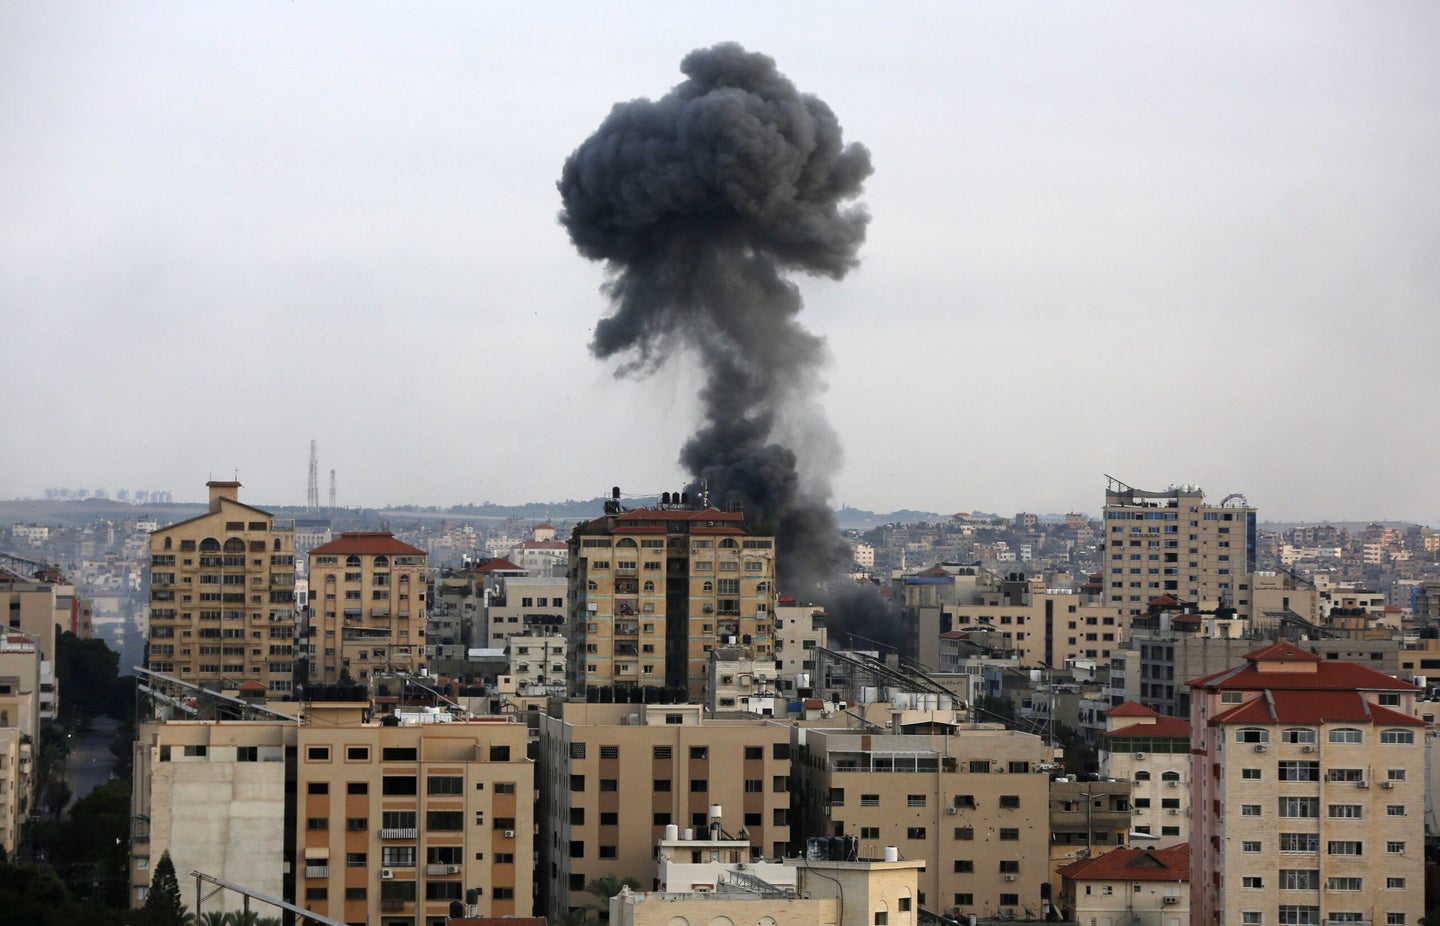 GAZA CITY, GAZA - OCTOBER 08: Smoke rises after Israeli airstrikes in Gaza City, Gaza on October 08, 2023. (Photo by Ashraf Amra/Anadolu Agency via Getty Images)